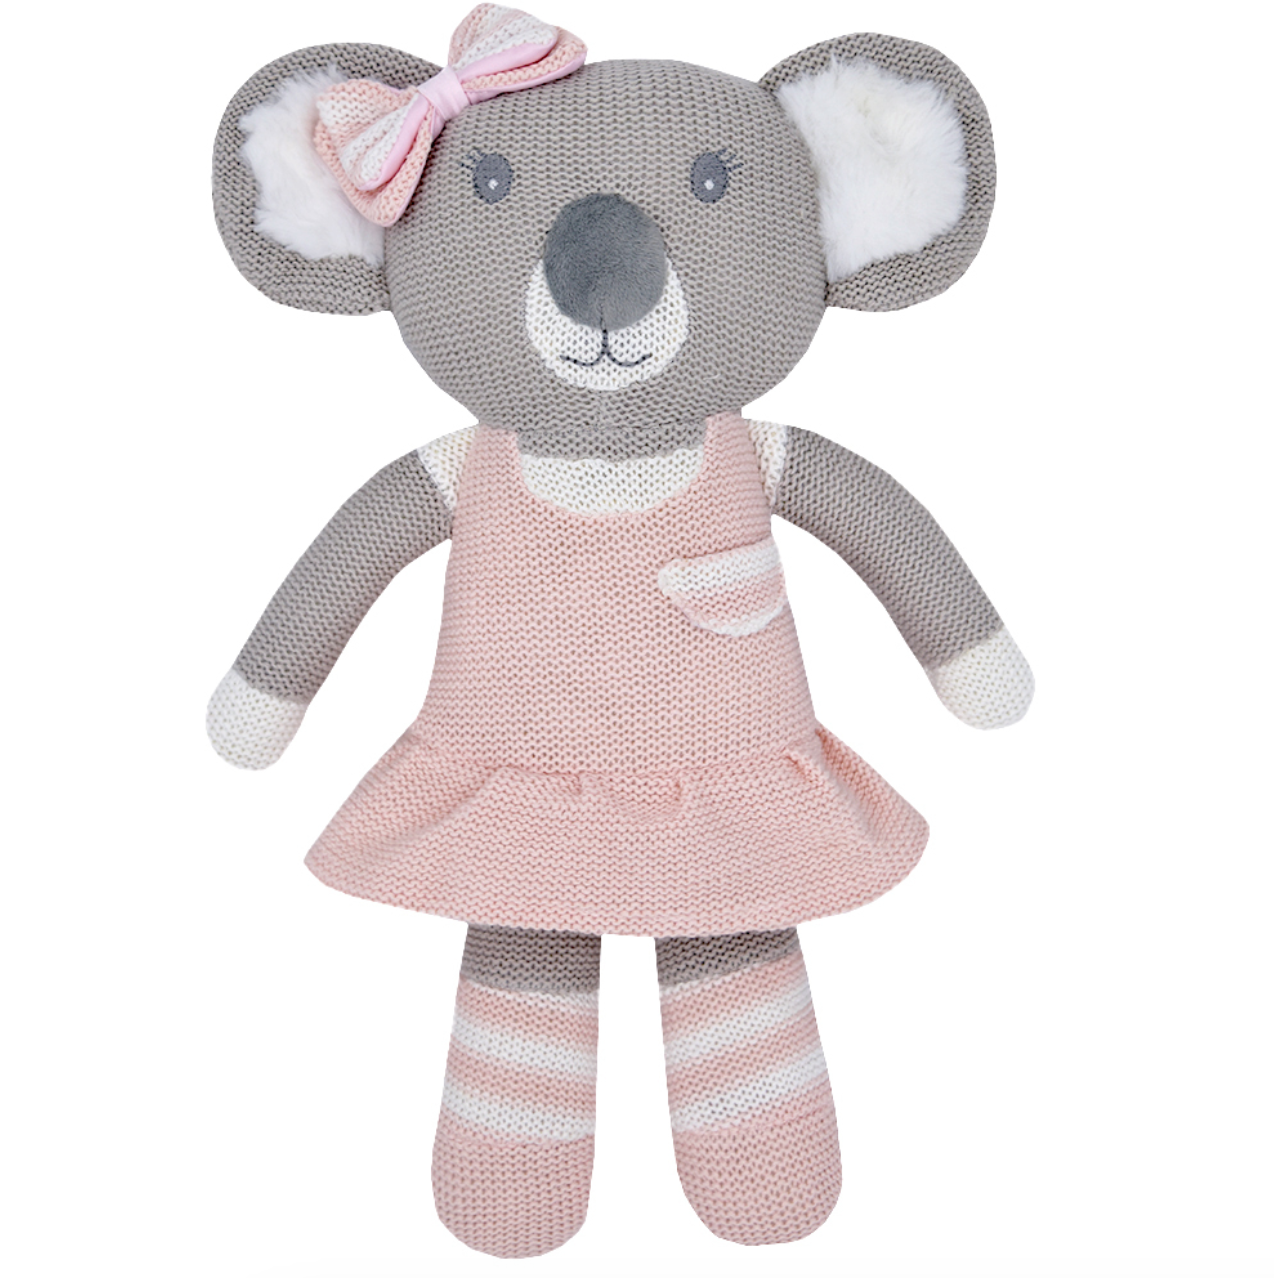 Chloe the Koala Knitted Toy